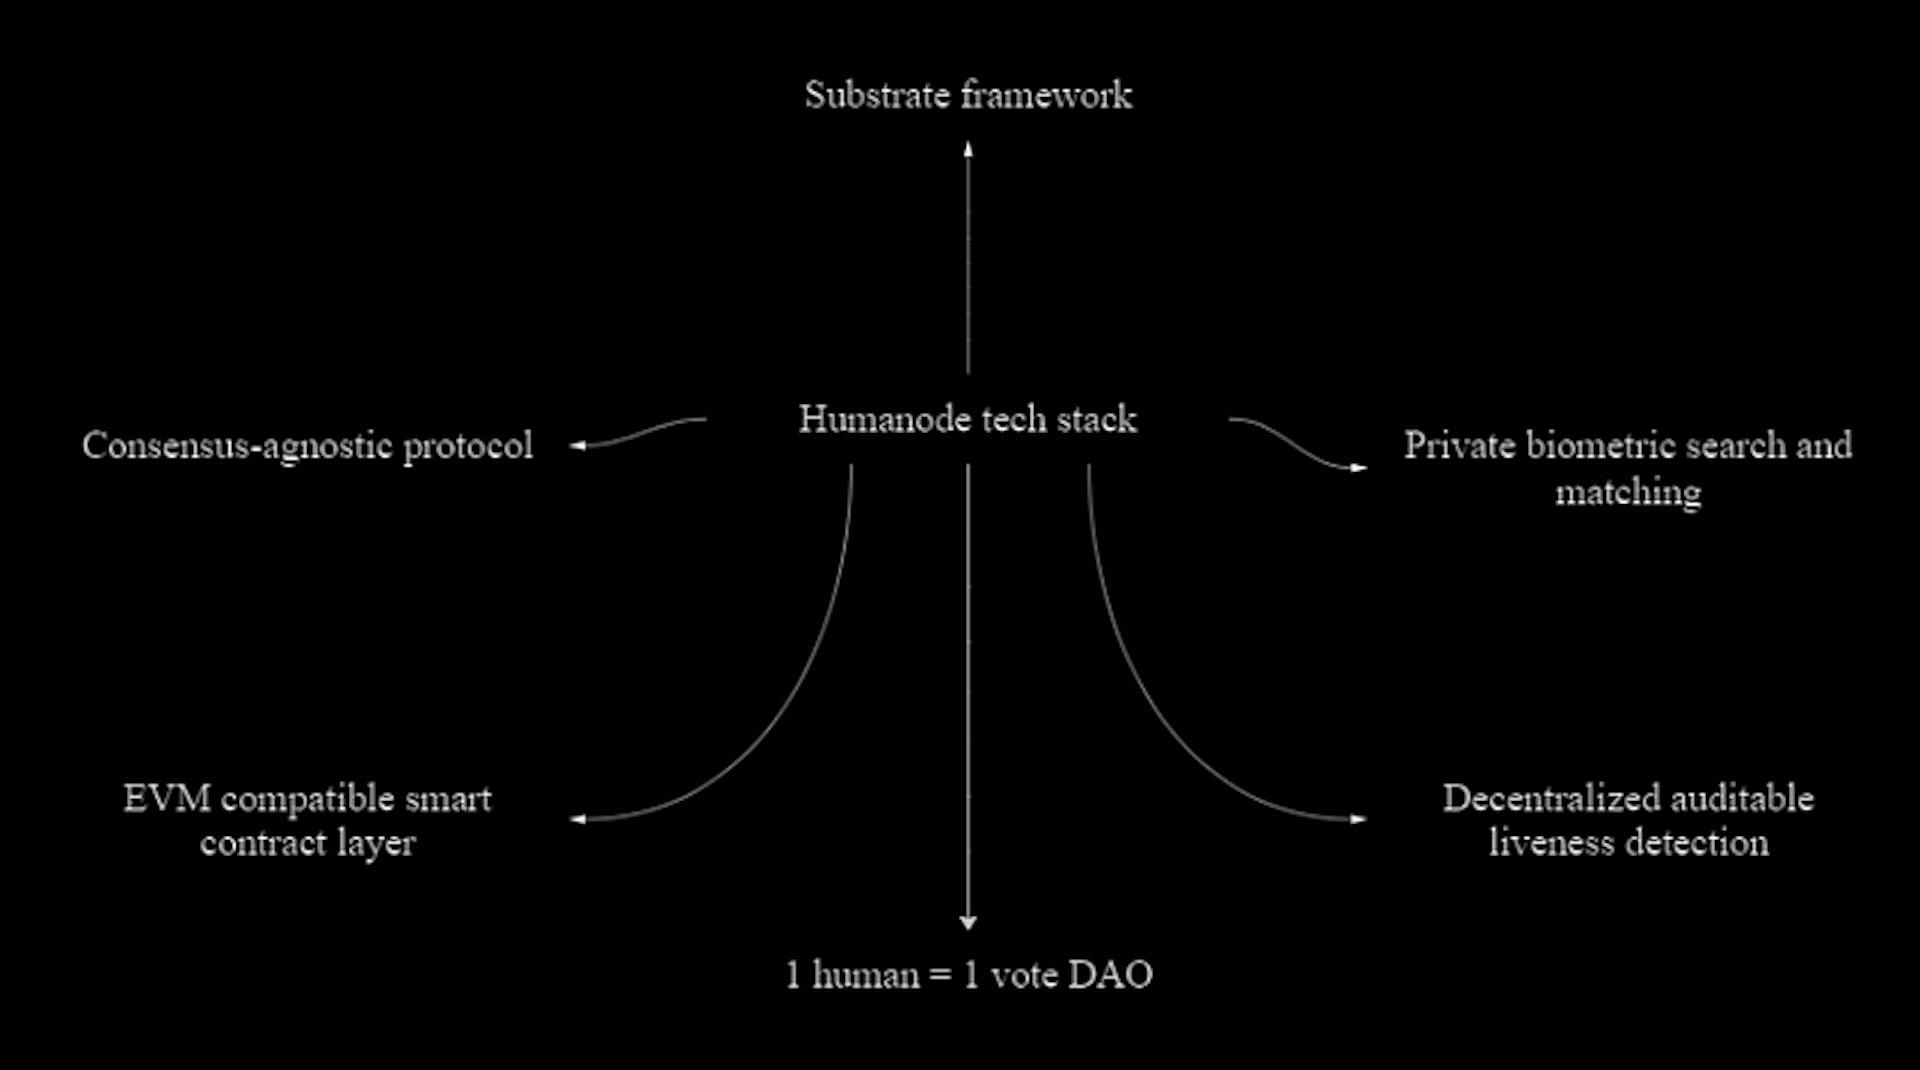 Scheme 5. Humanode tech stack.